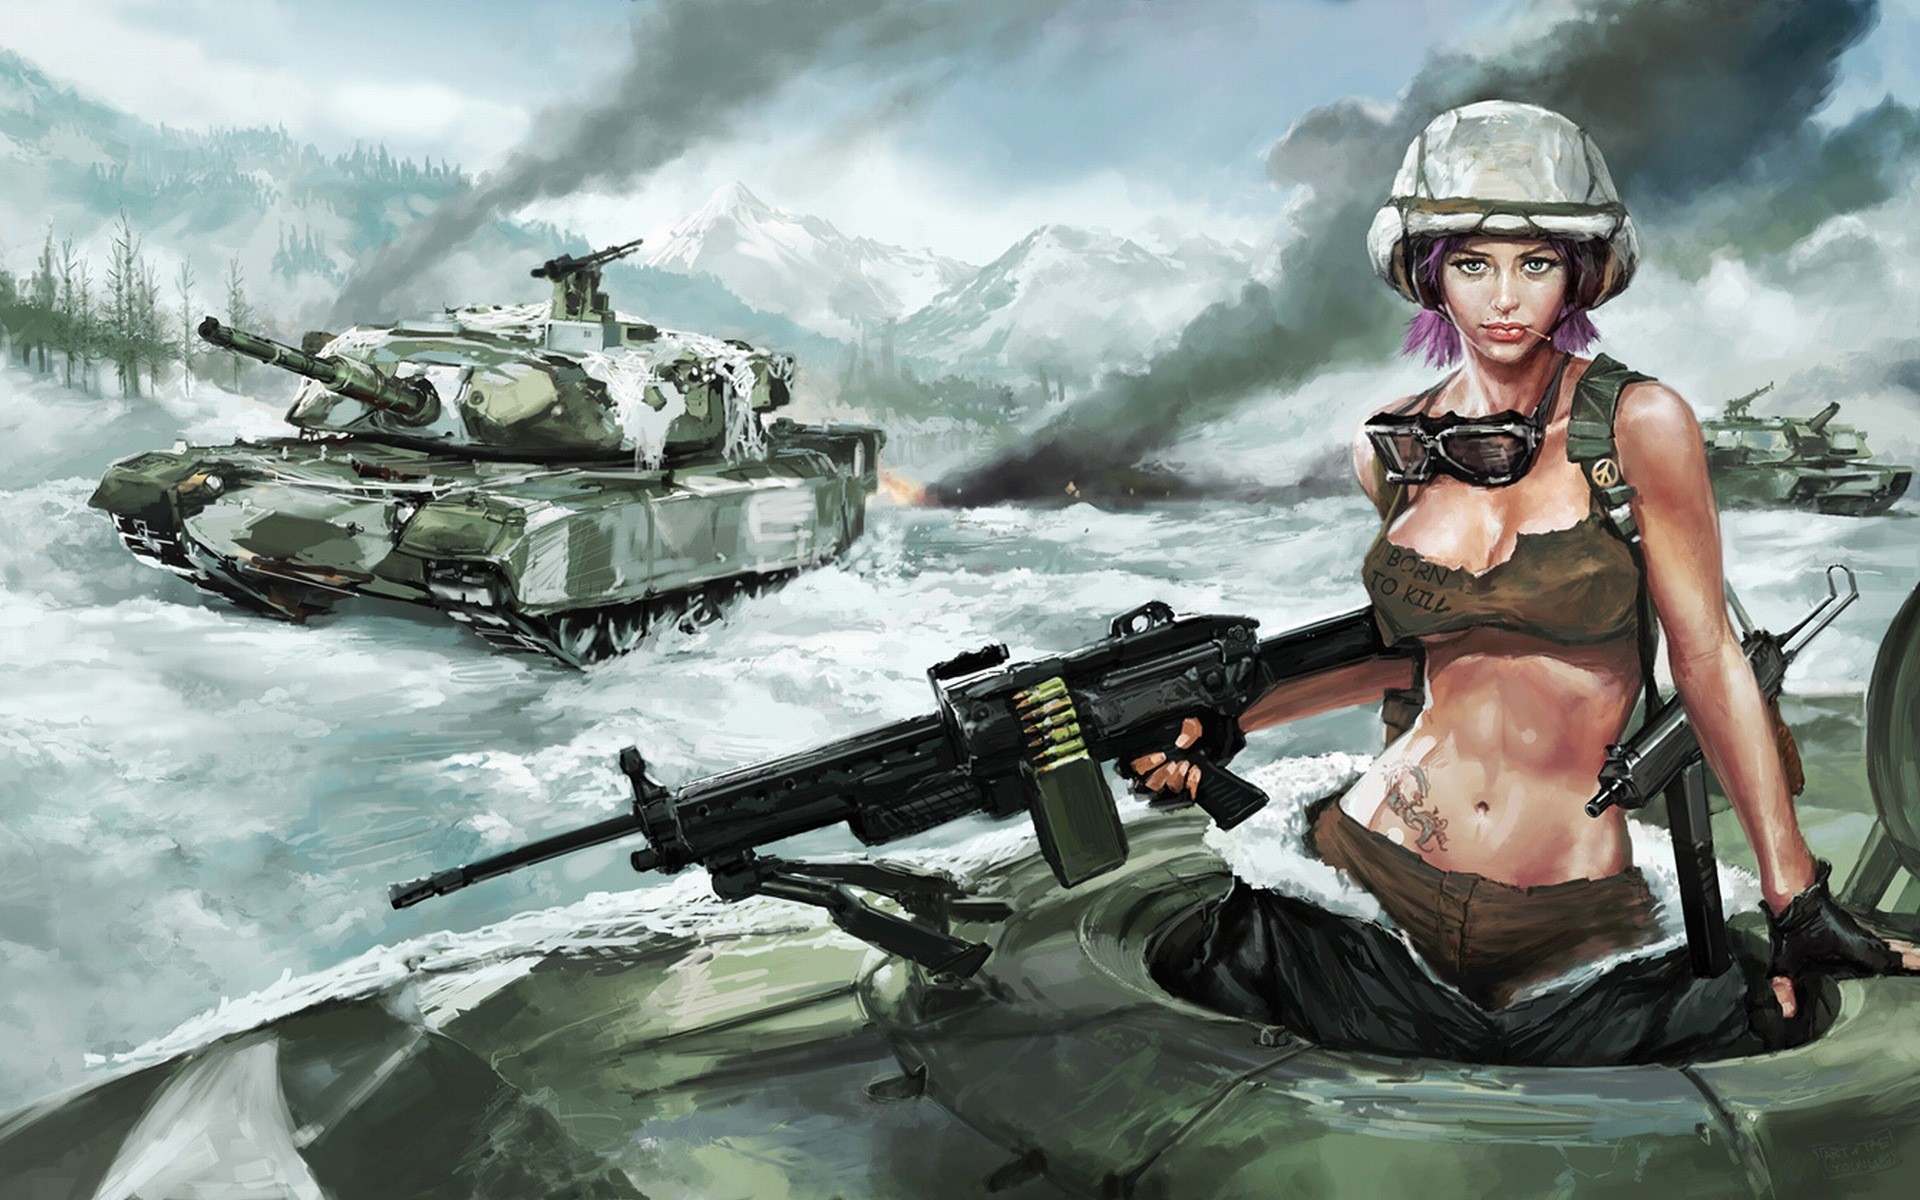 General 1920x1200 artwork erotic art  women soldier military helmet bra boobs big boobs belly weapon machine gun vehicle tank military vehicle